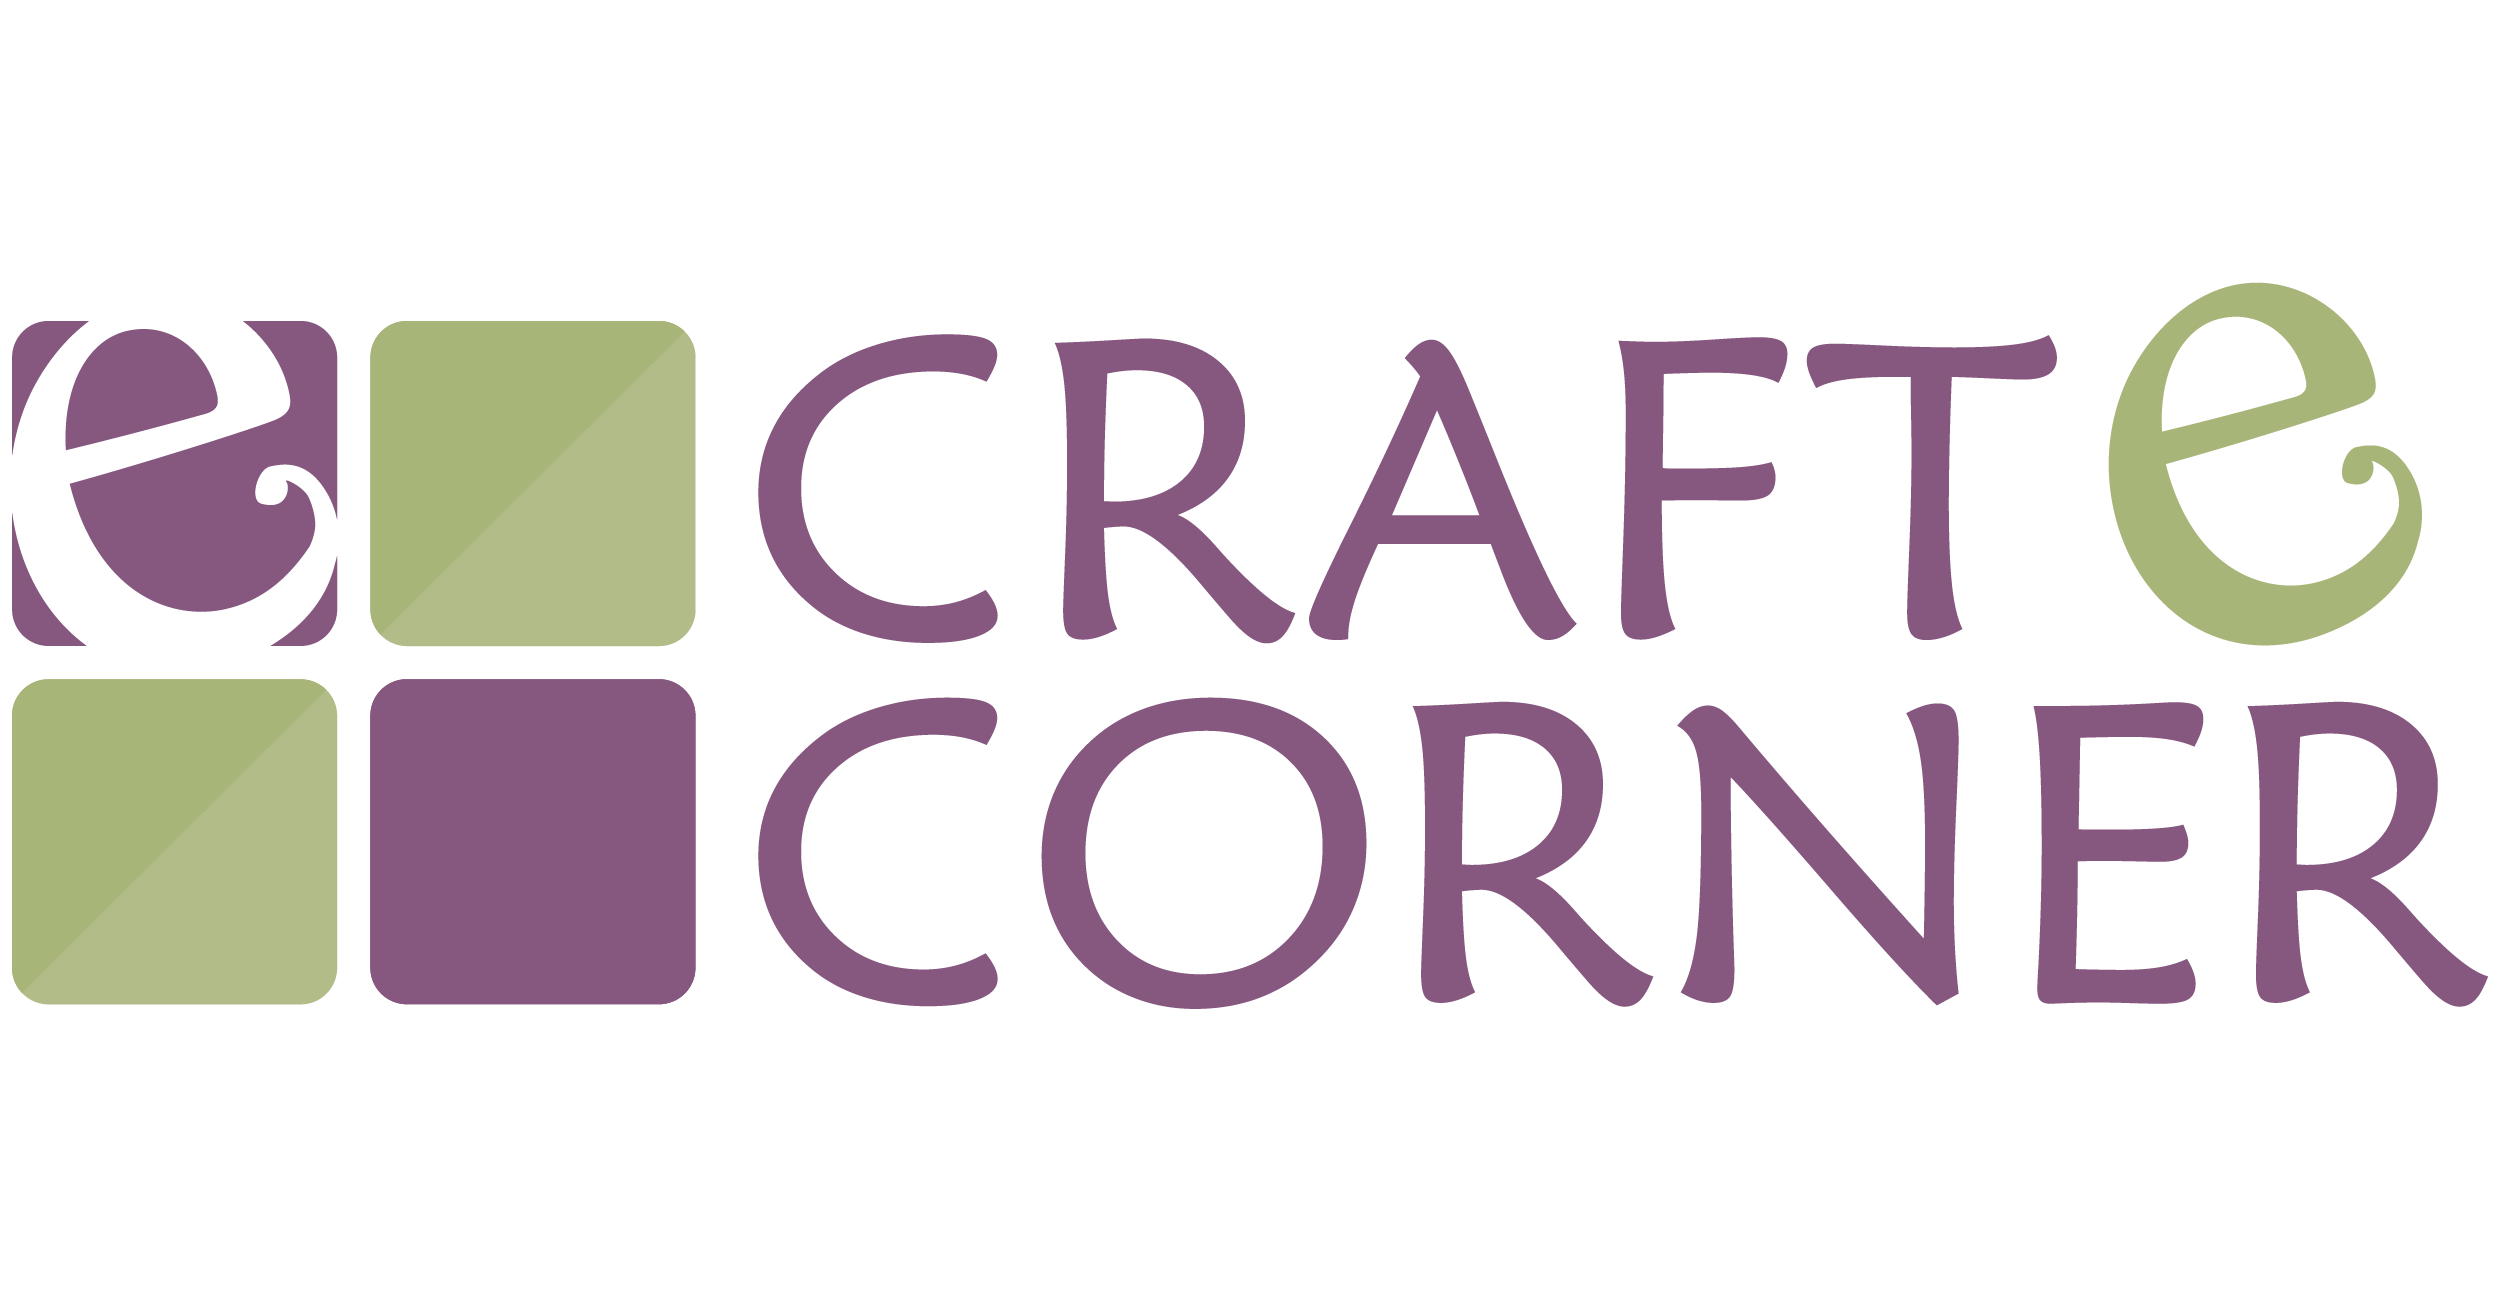 (c) Craft-e-corner.com